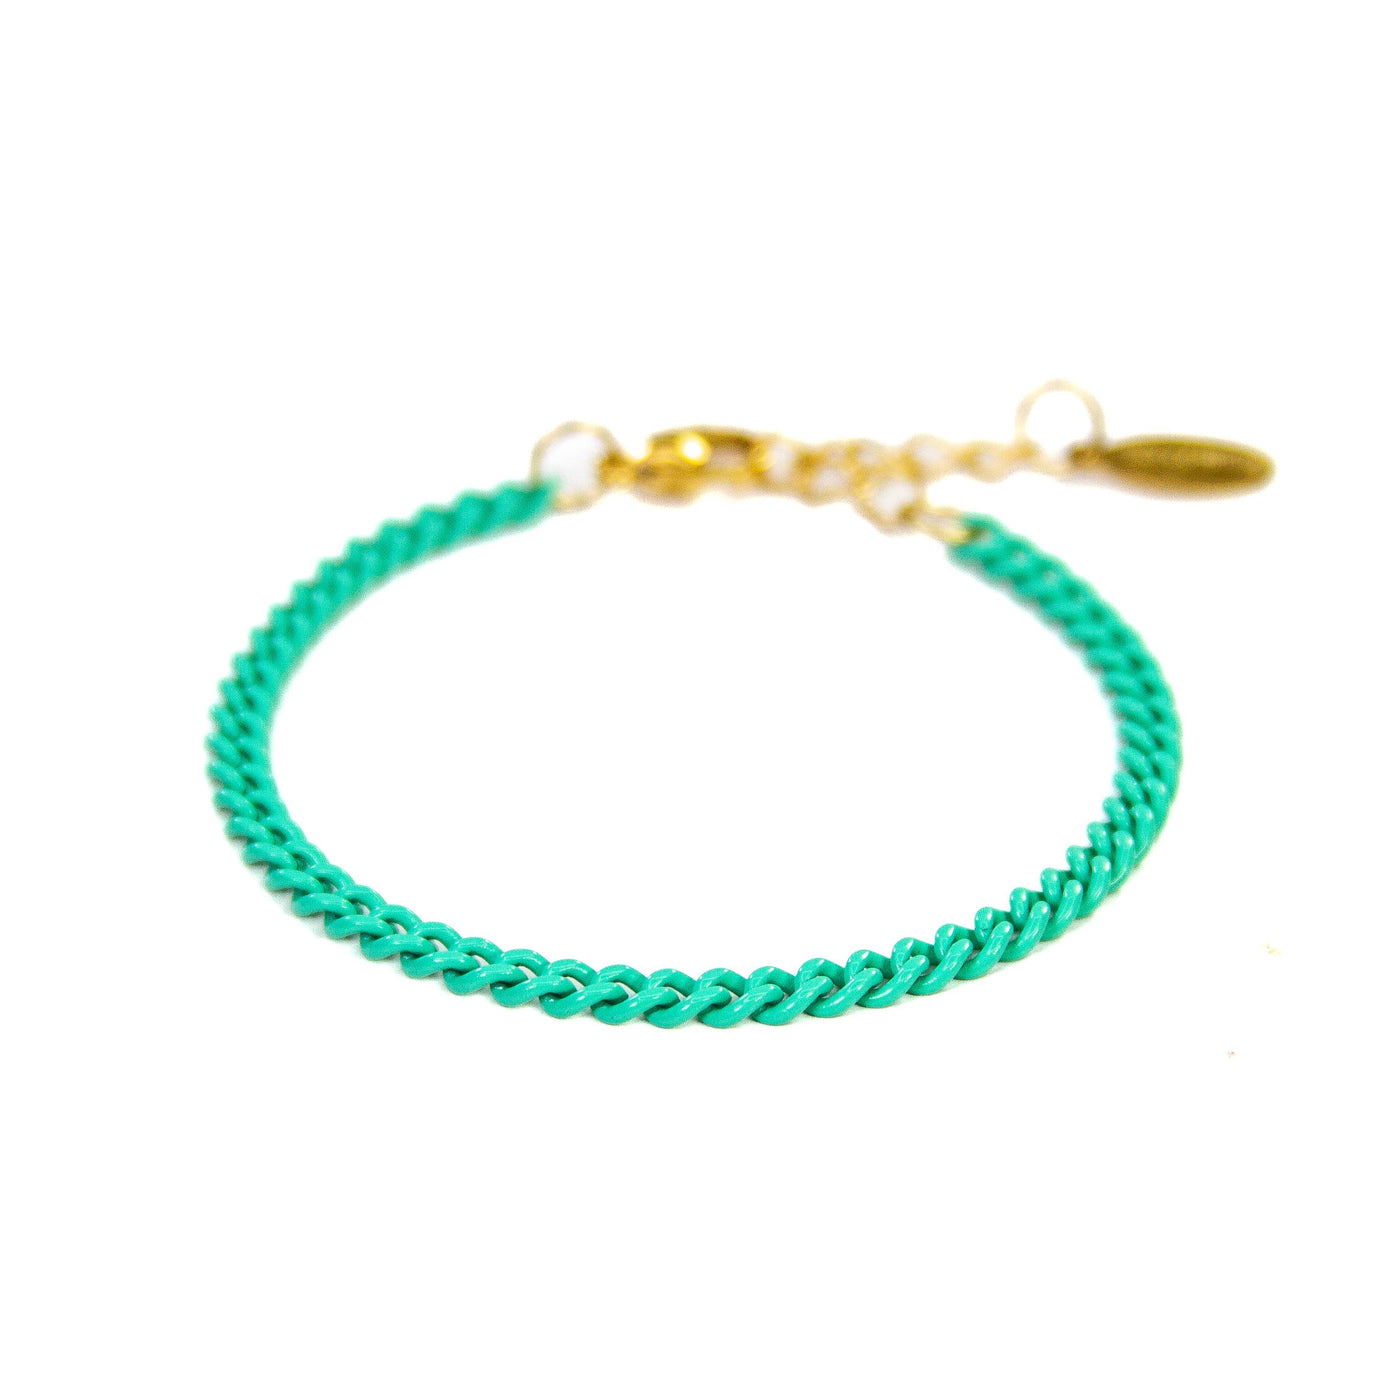 Chain link bracelet - Turquoise Green